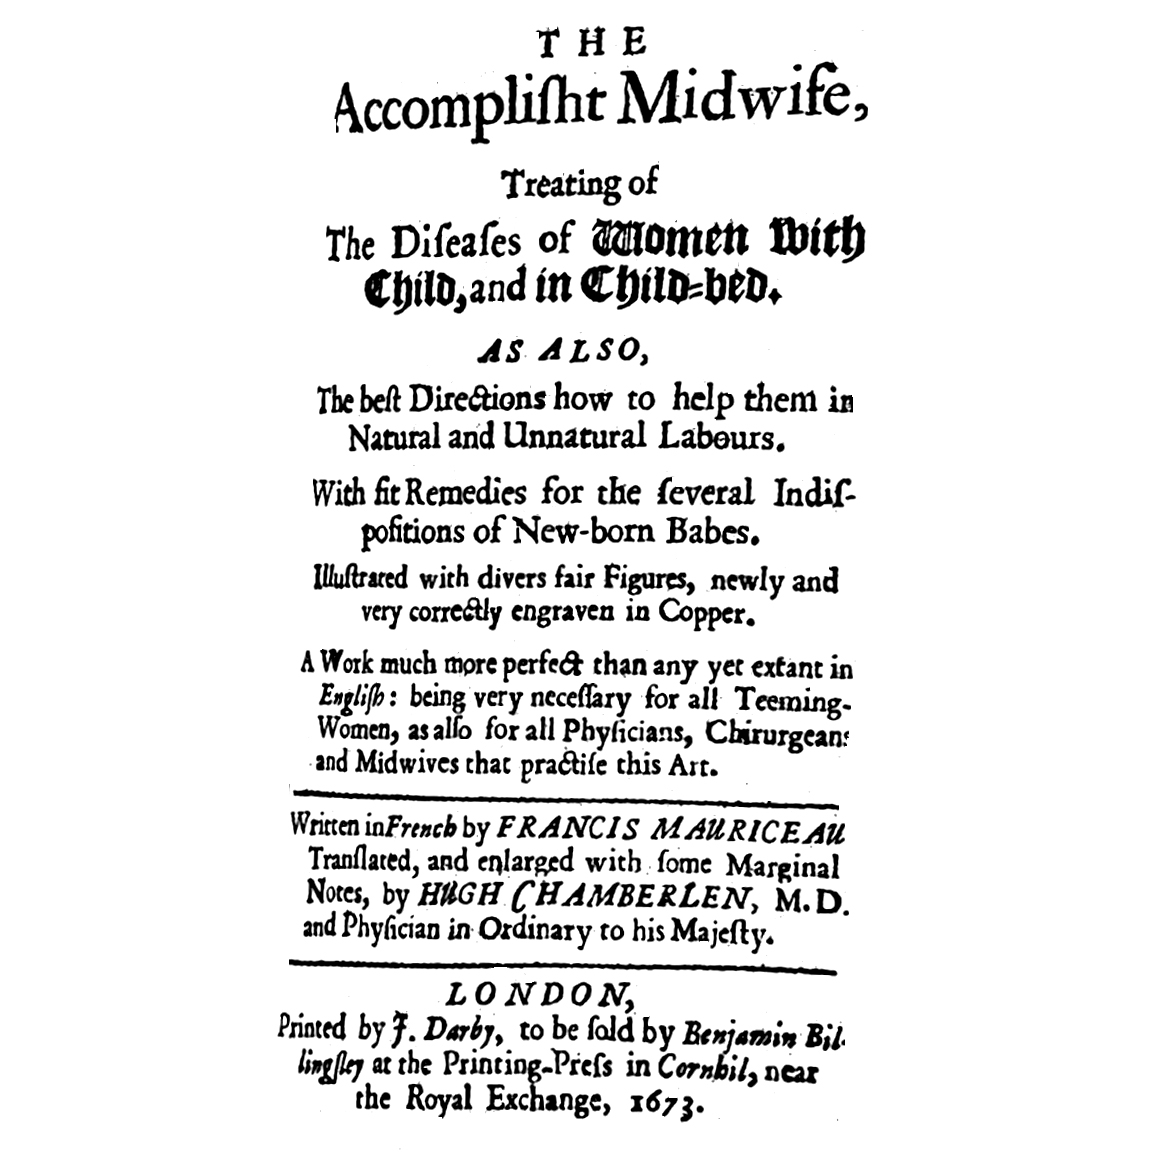 1673-MAURICEAU-Chamberlen-Accomplished Midwife-title